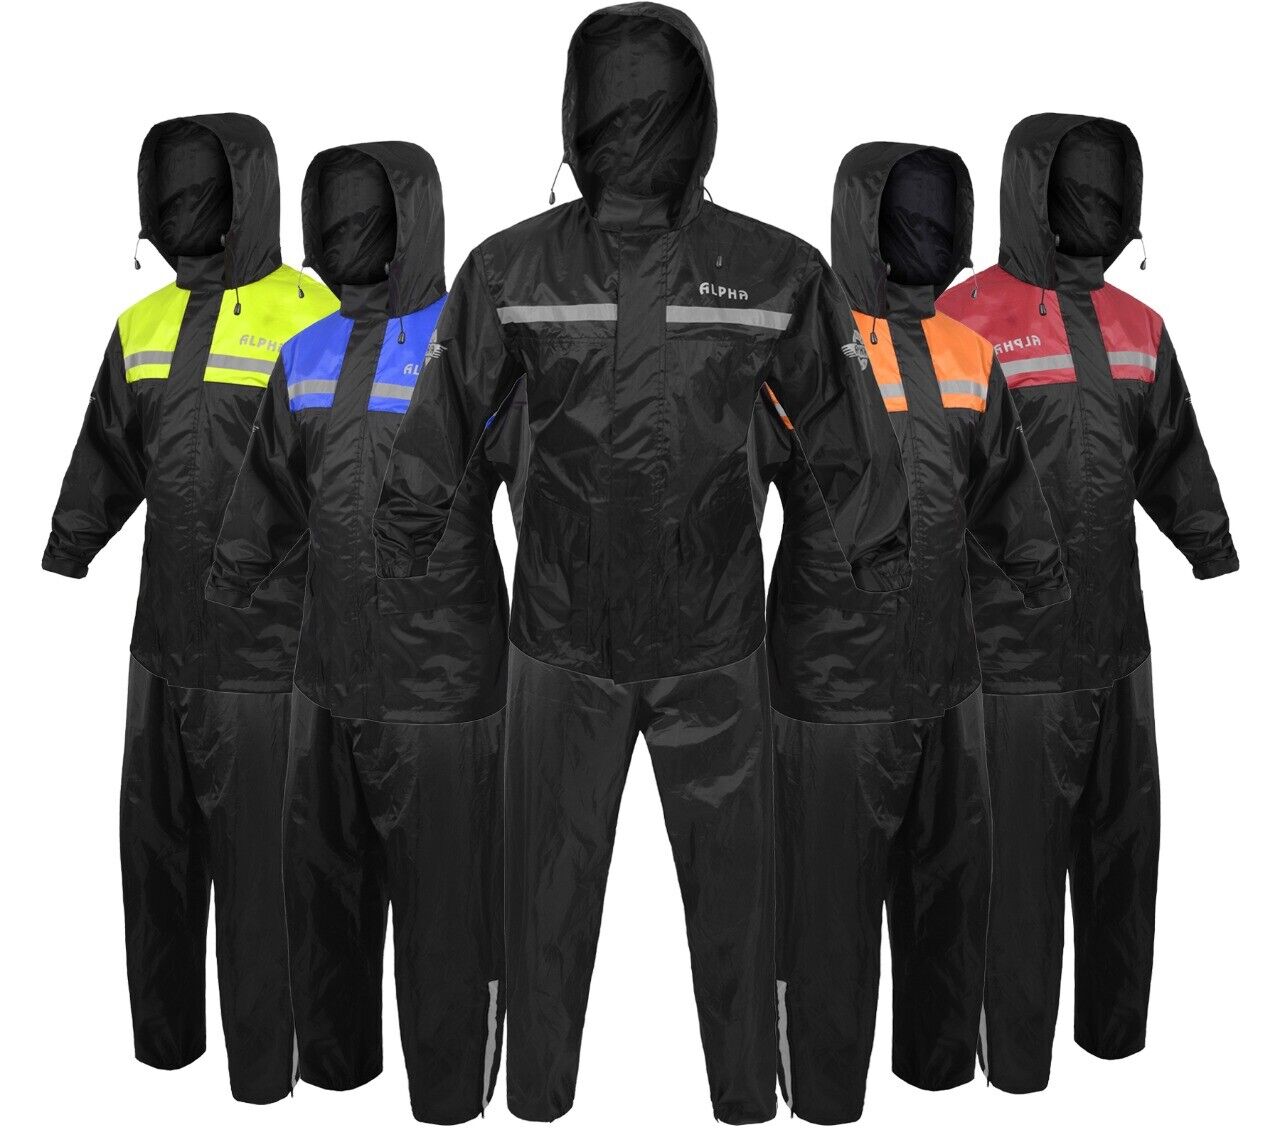 Rain Suit for Men Women Jackets Pant Gear Reflective Waterproof motorcycle hivis